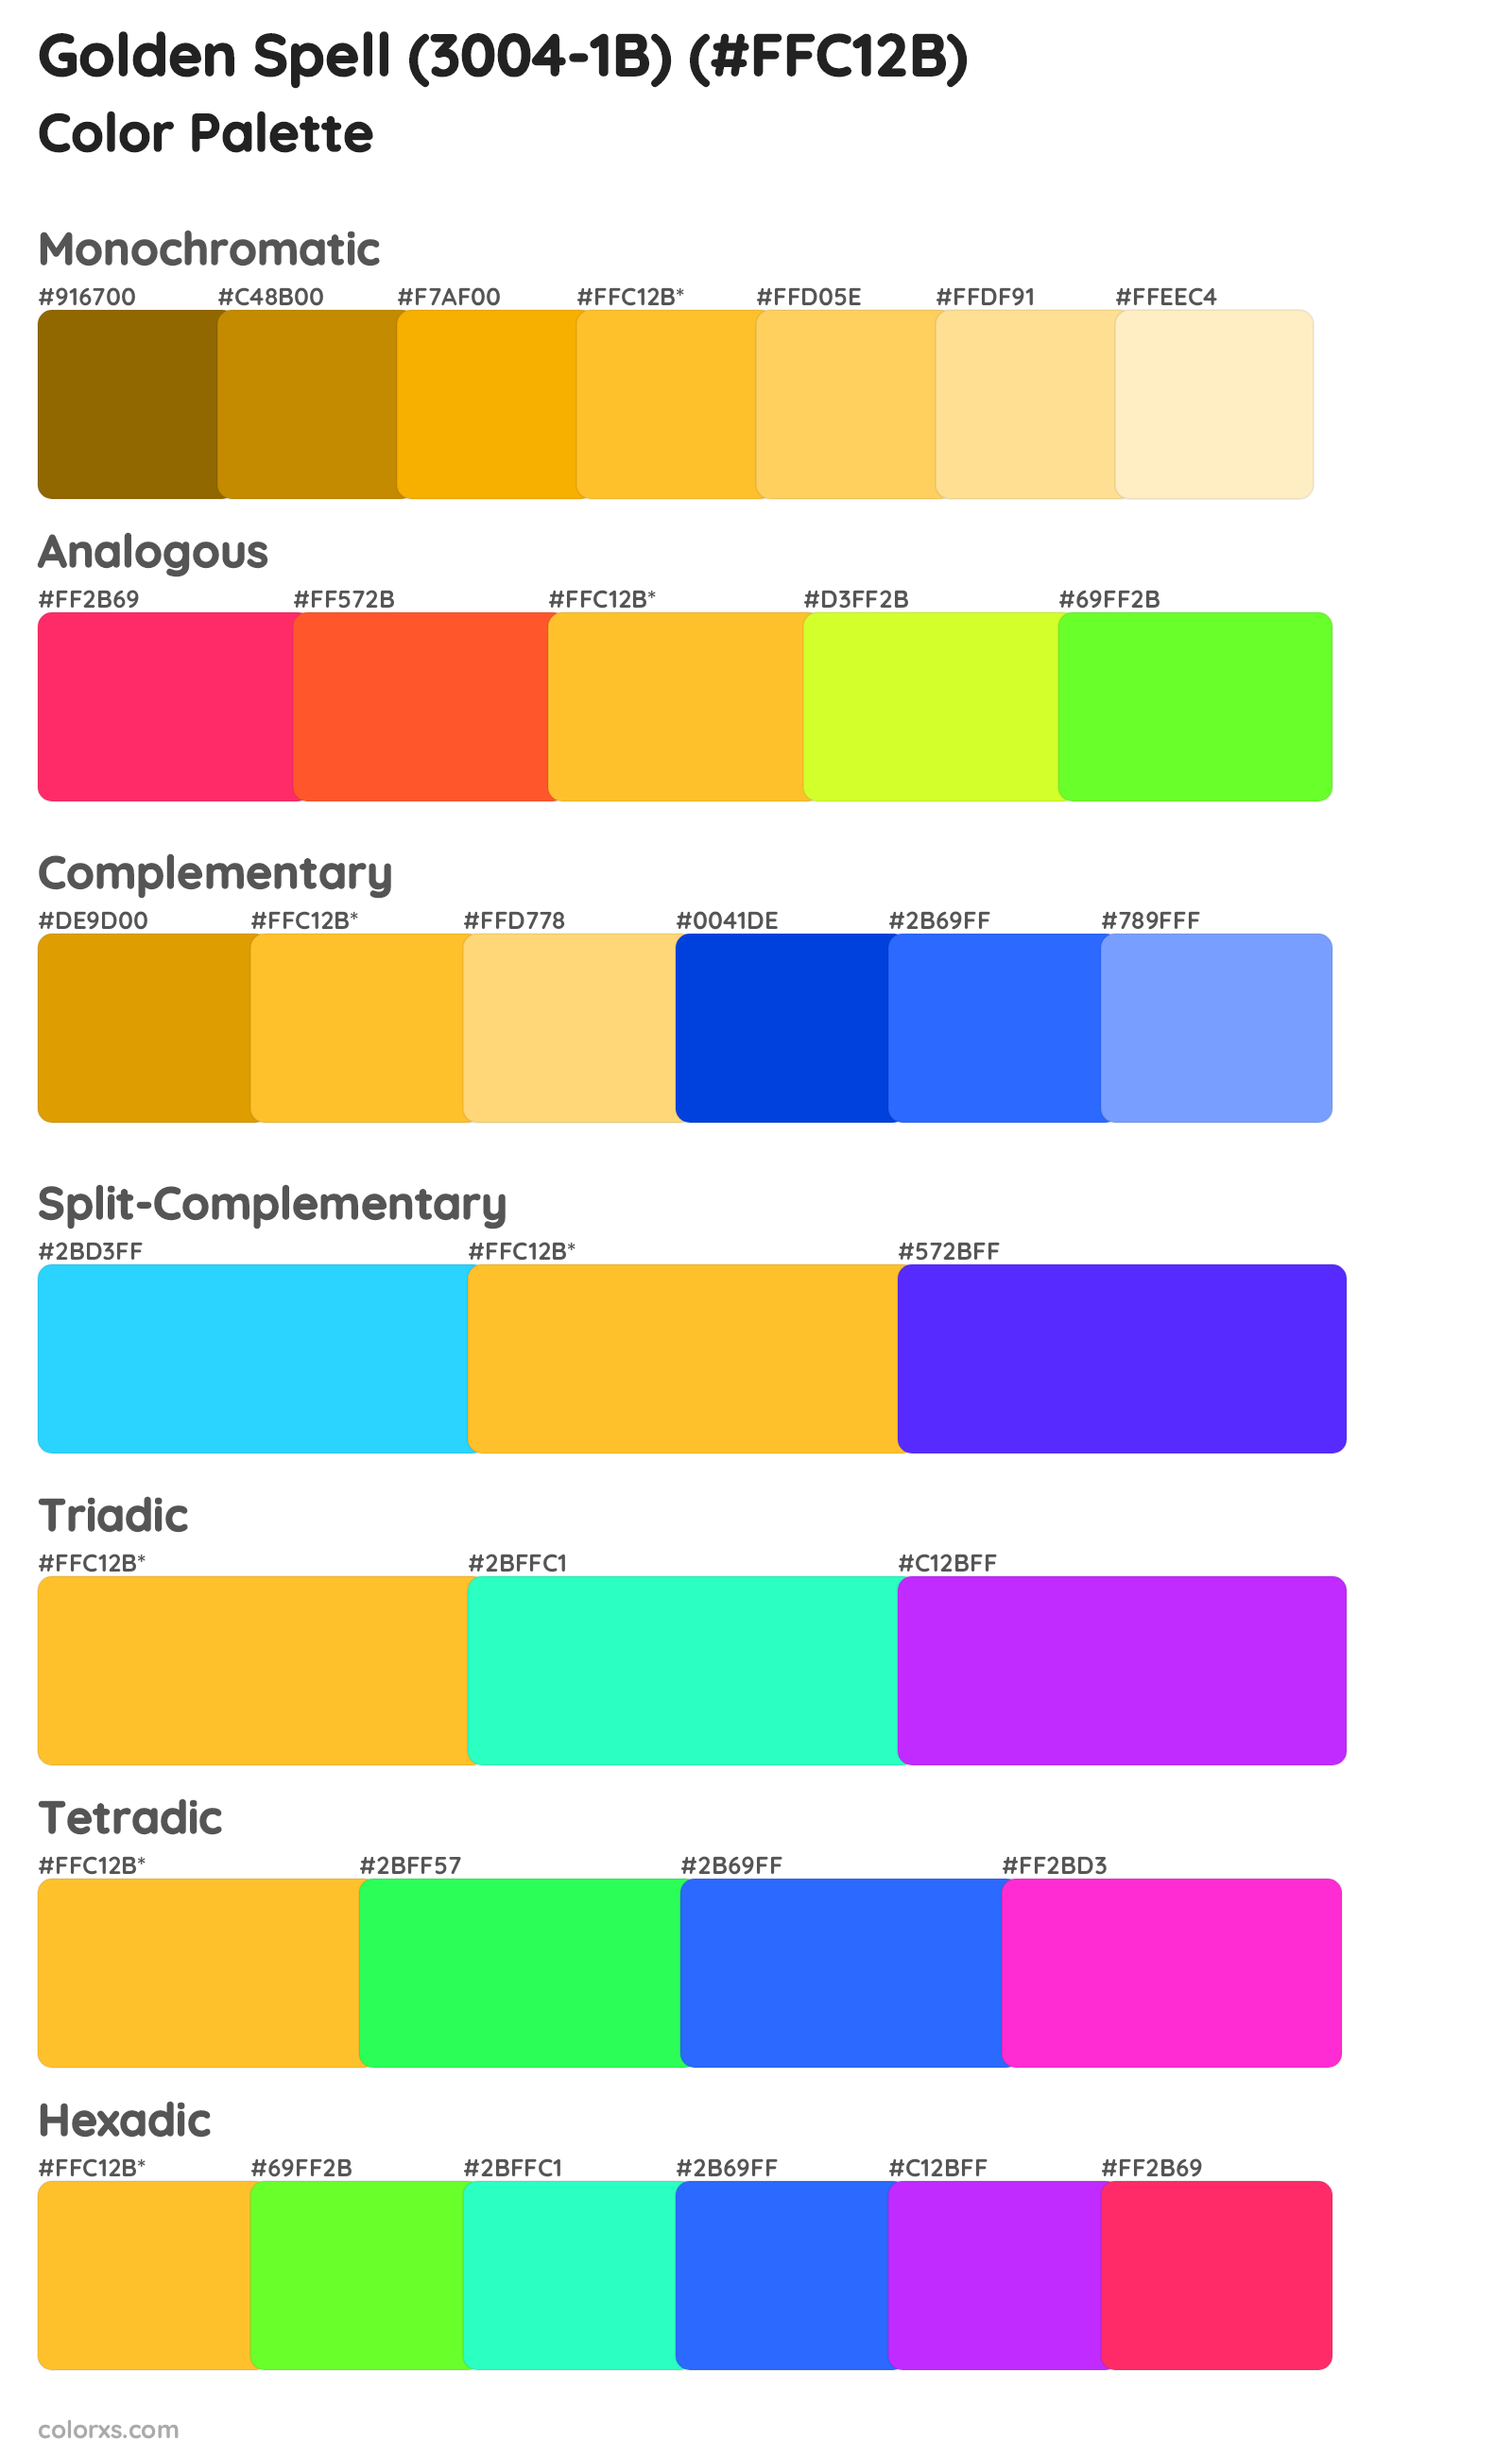 Golden Spell (3004-1B) Color Scheme Palettes